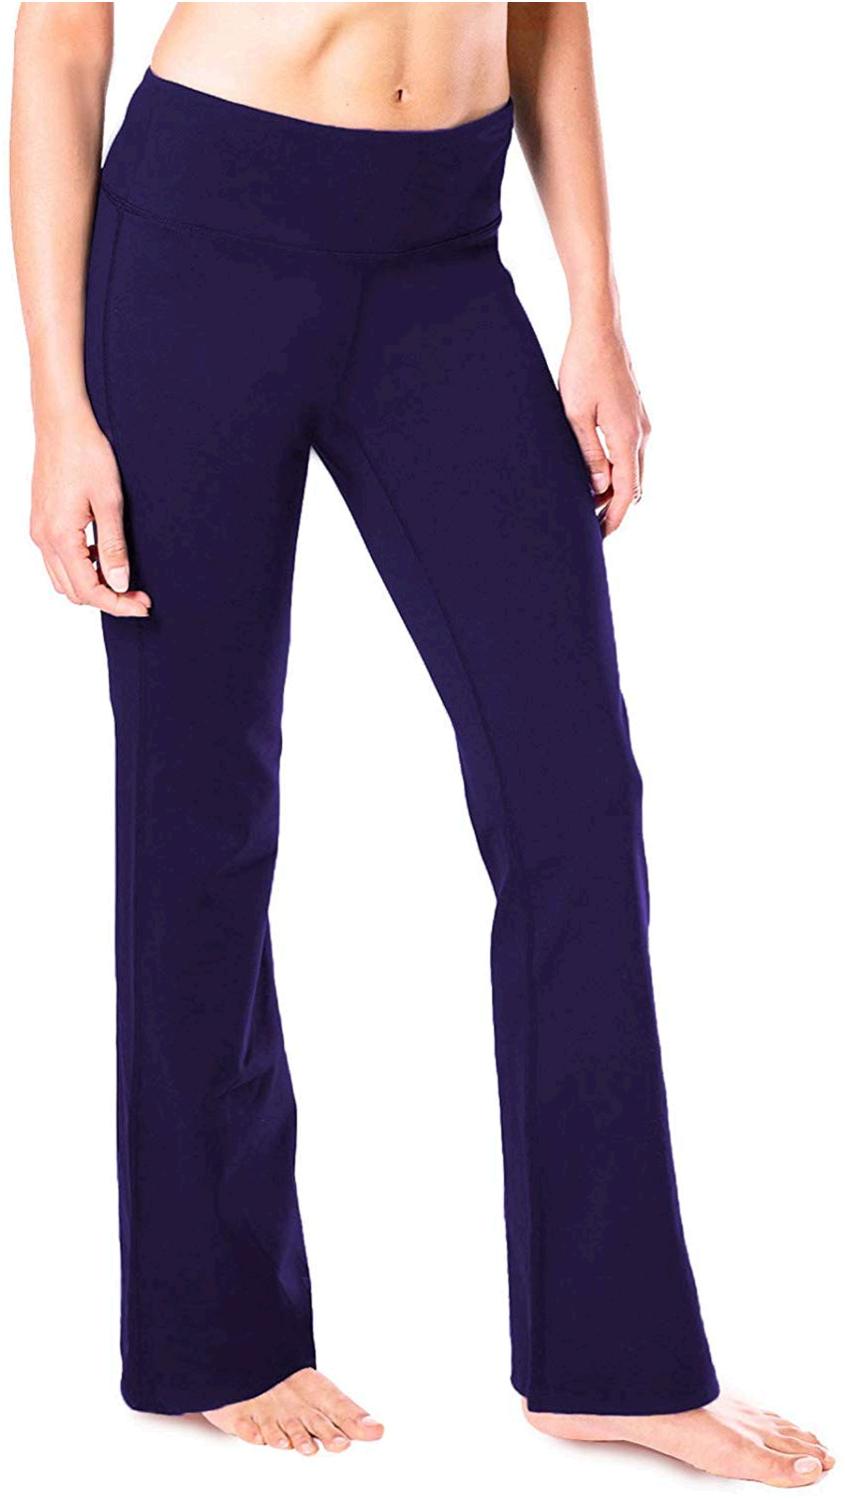 Buy G Gradual28/30/32/34 Inseam Women's Bootcut Yoga Pants